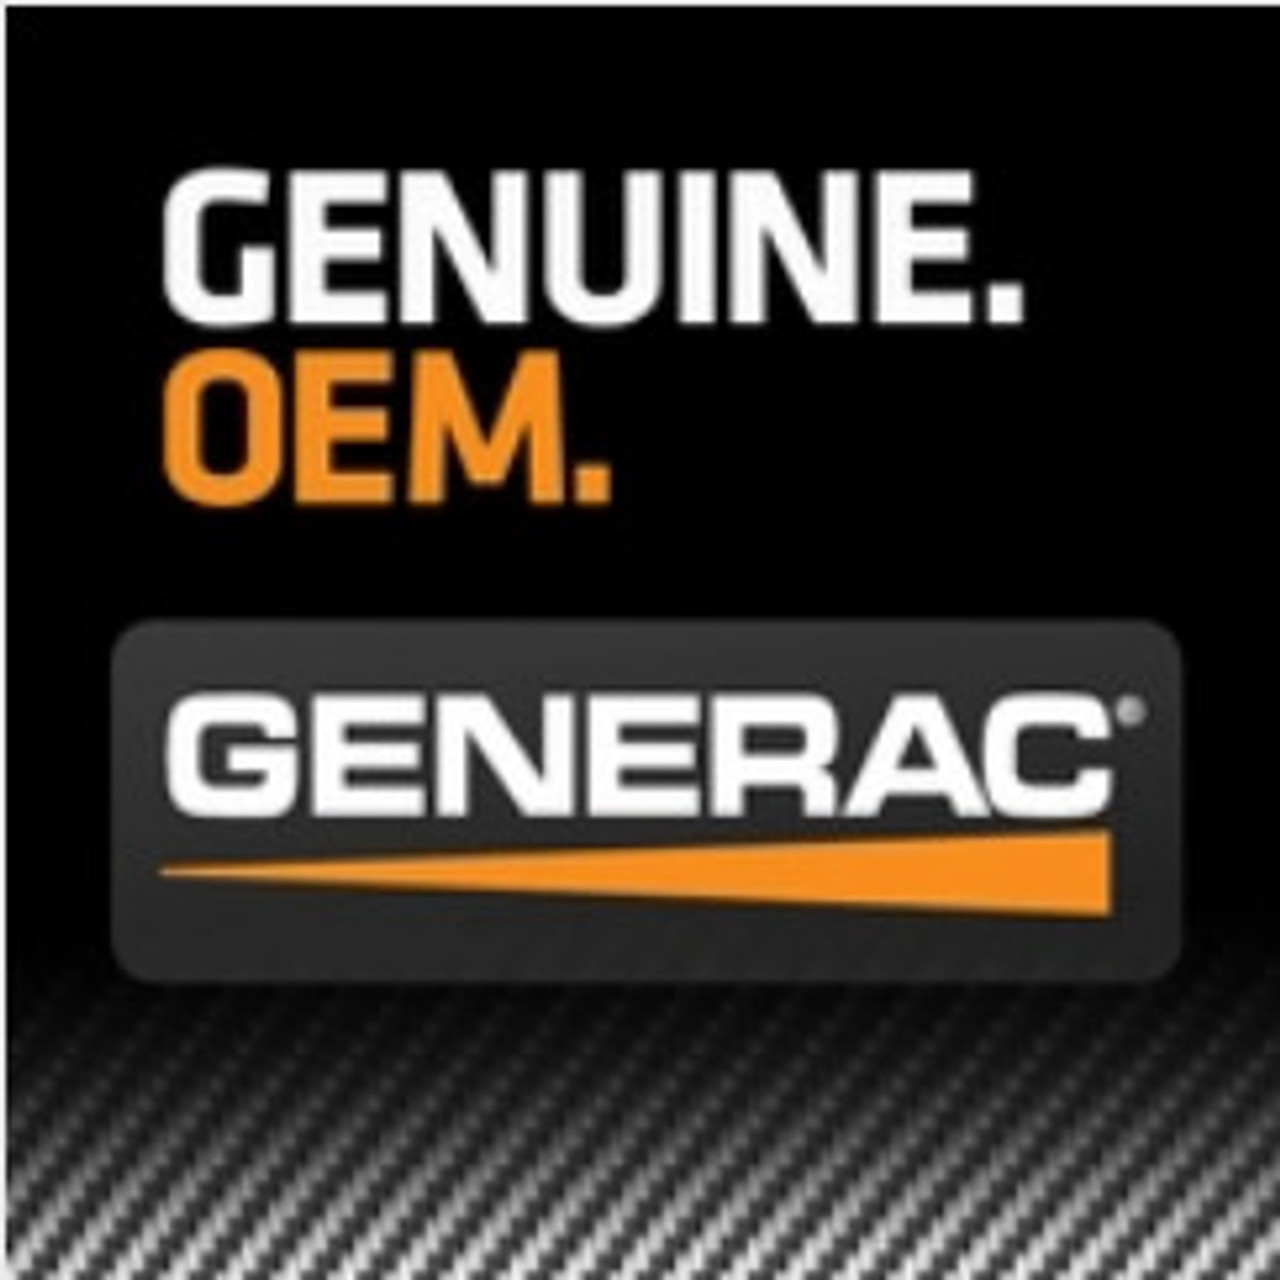 Generac Genuine OEM Generator Parts